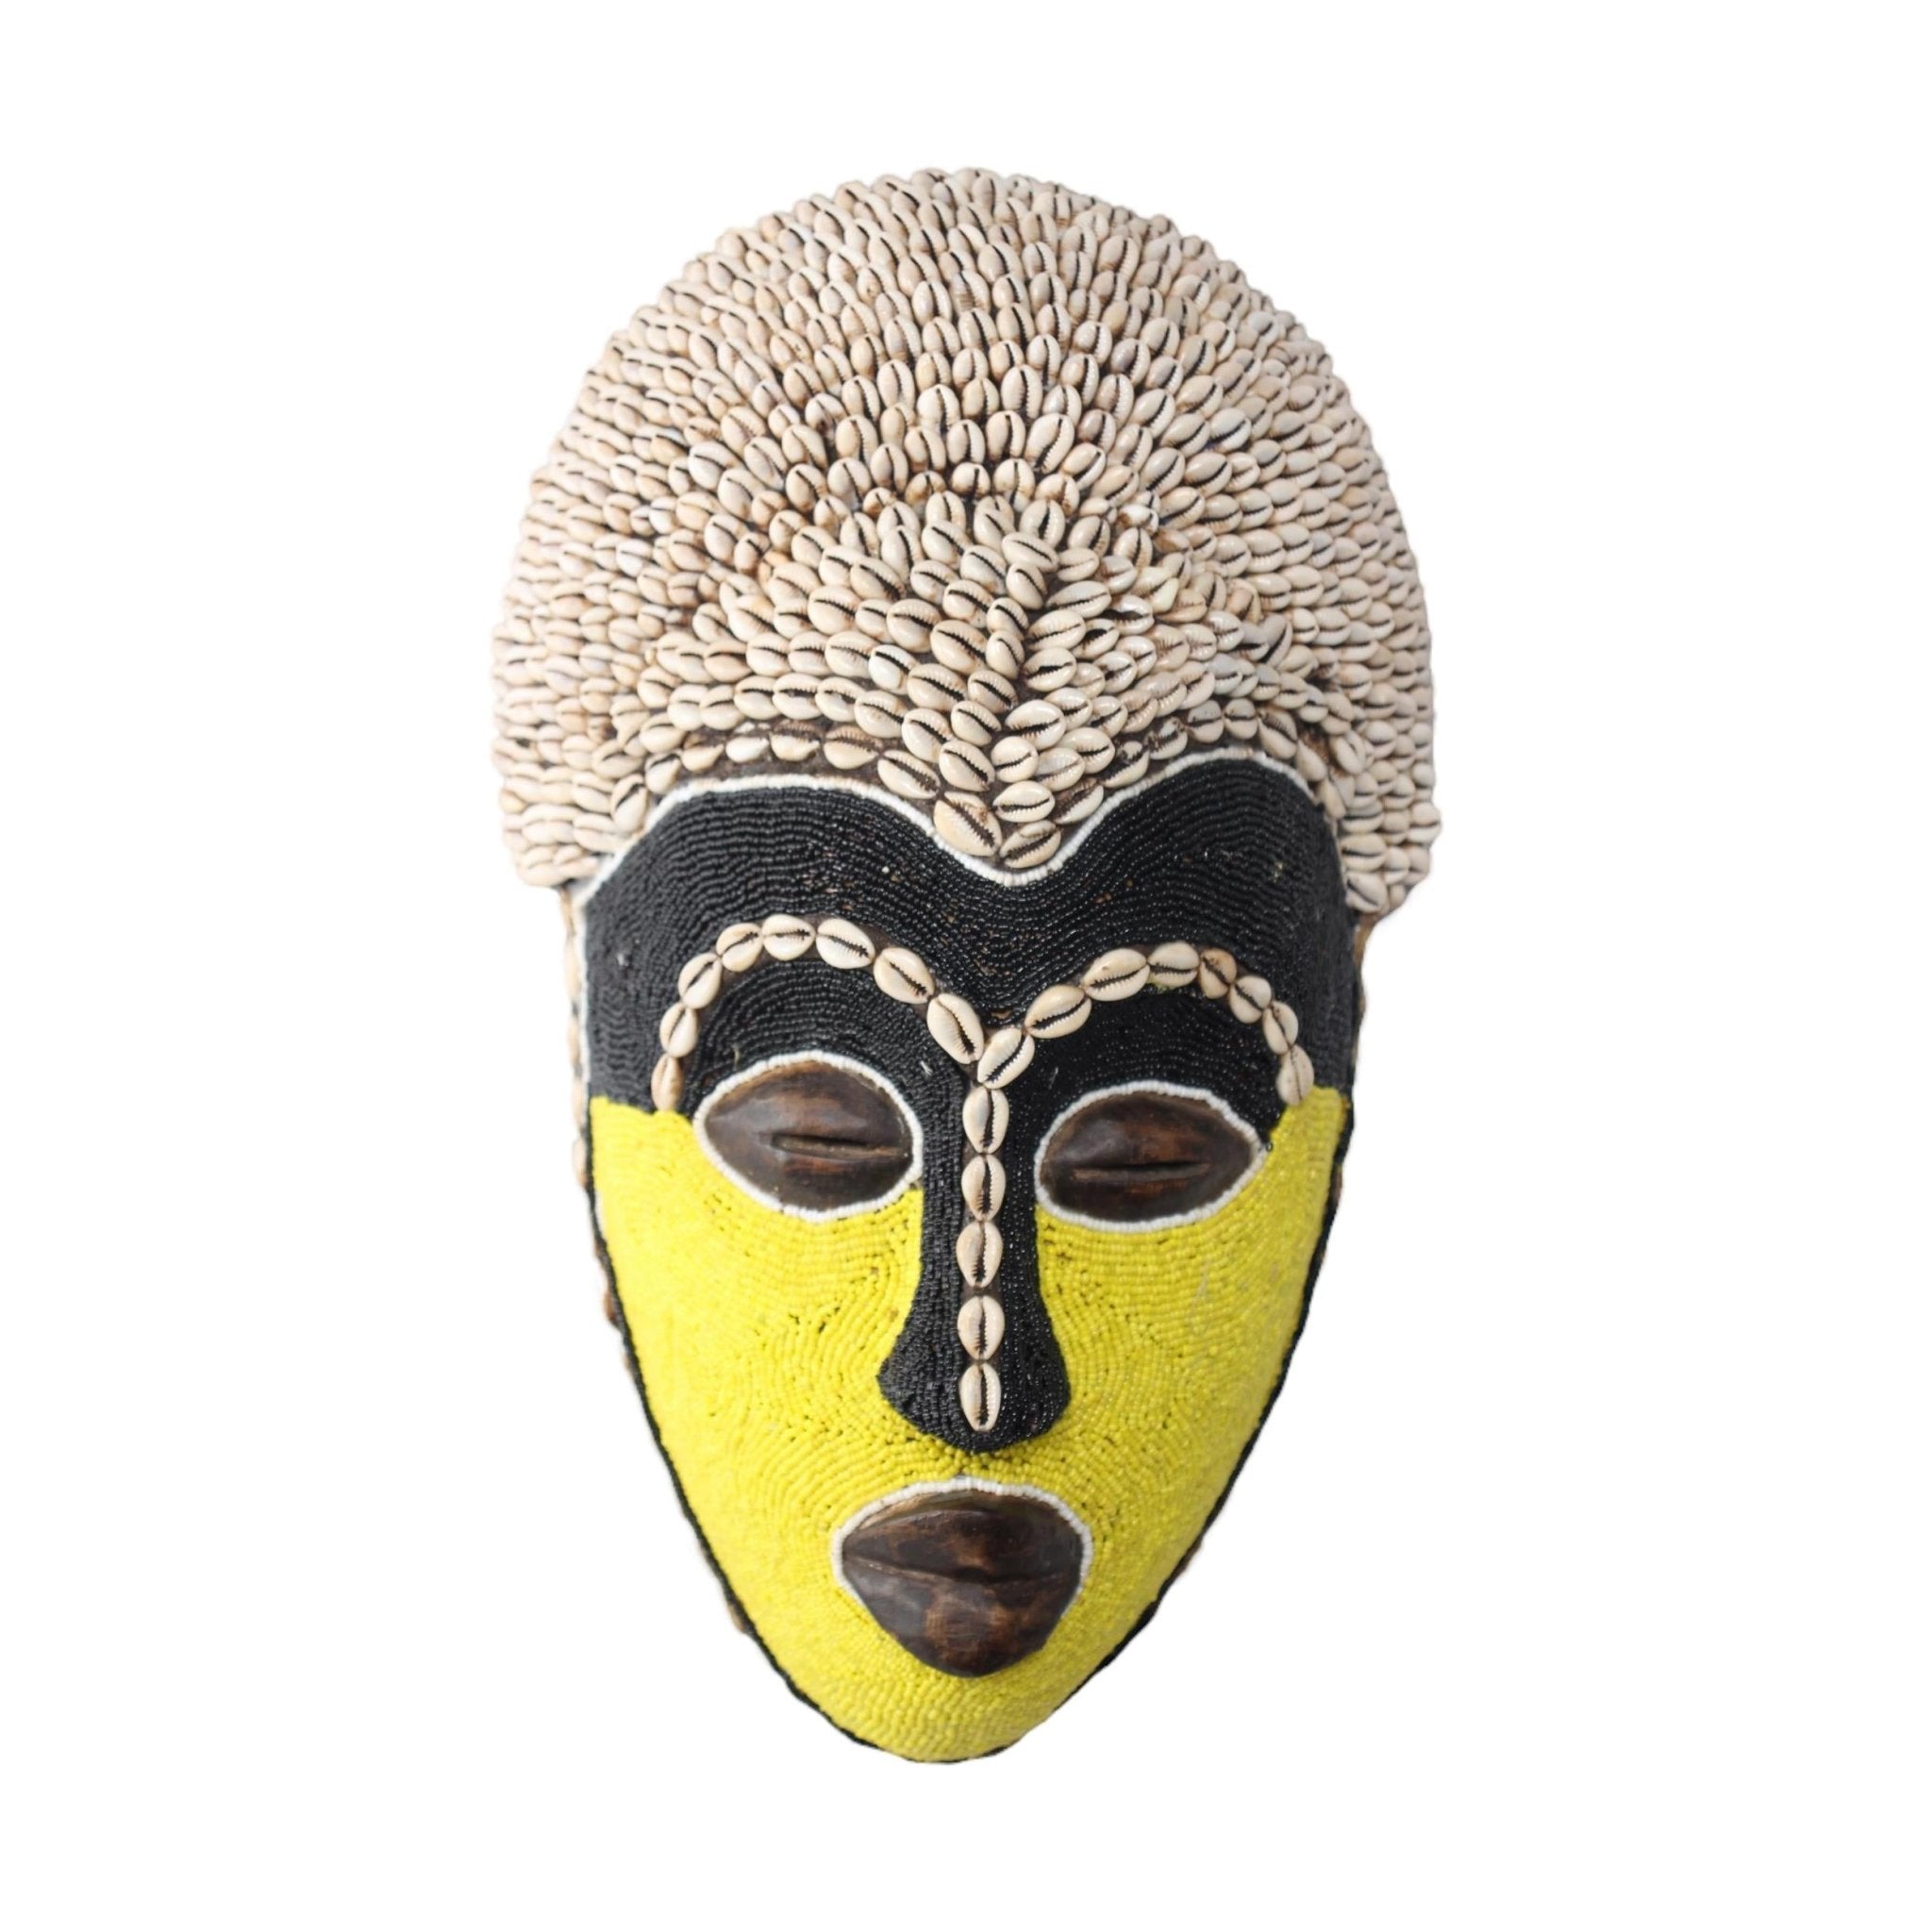 Baule Tribe Mask ~16.1" Tall - African Angel Art - Mask